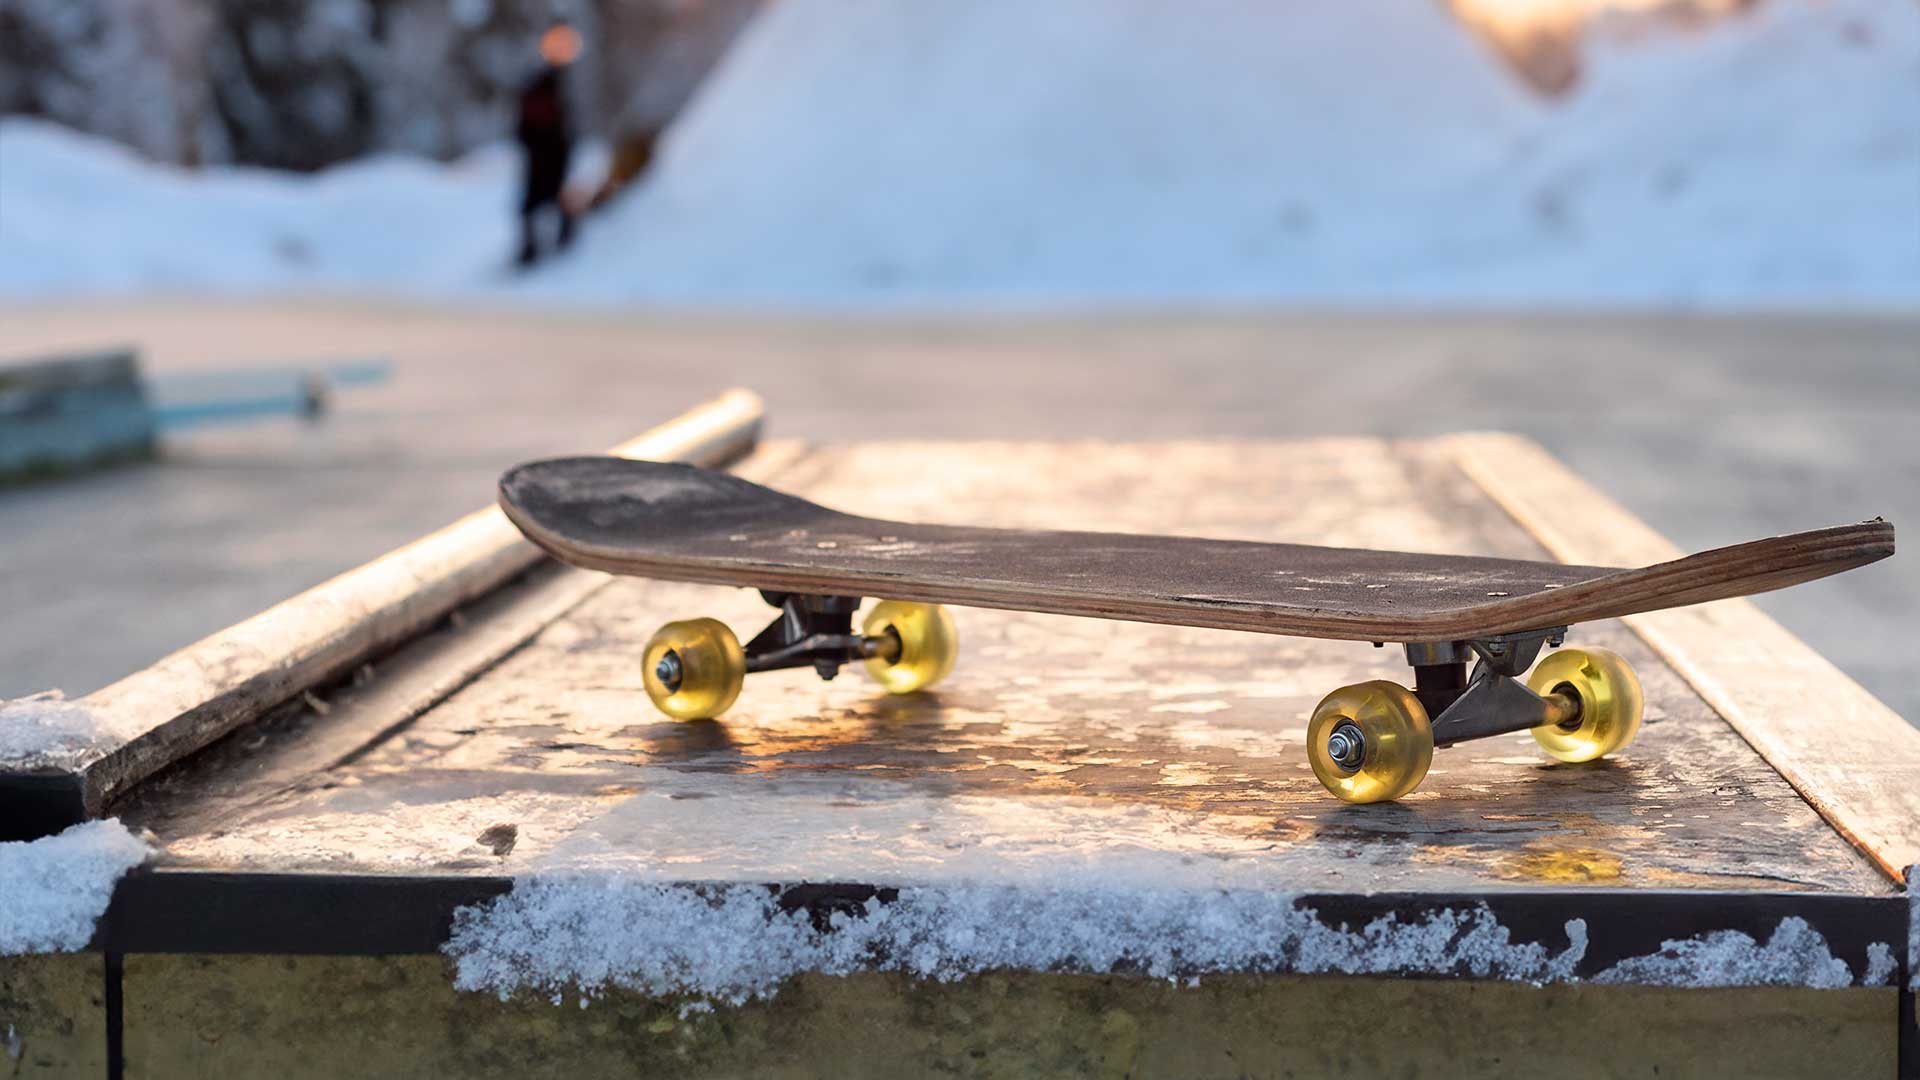 Preventing Skate Park Winter Damage